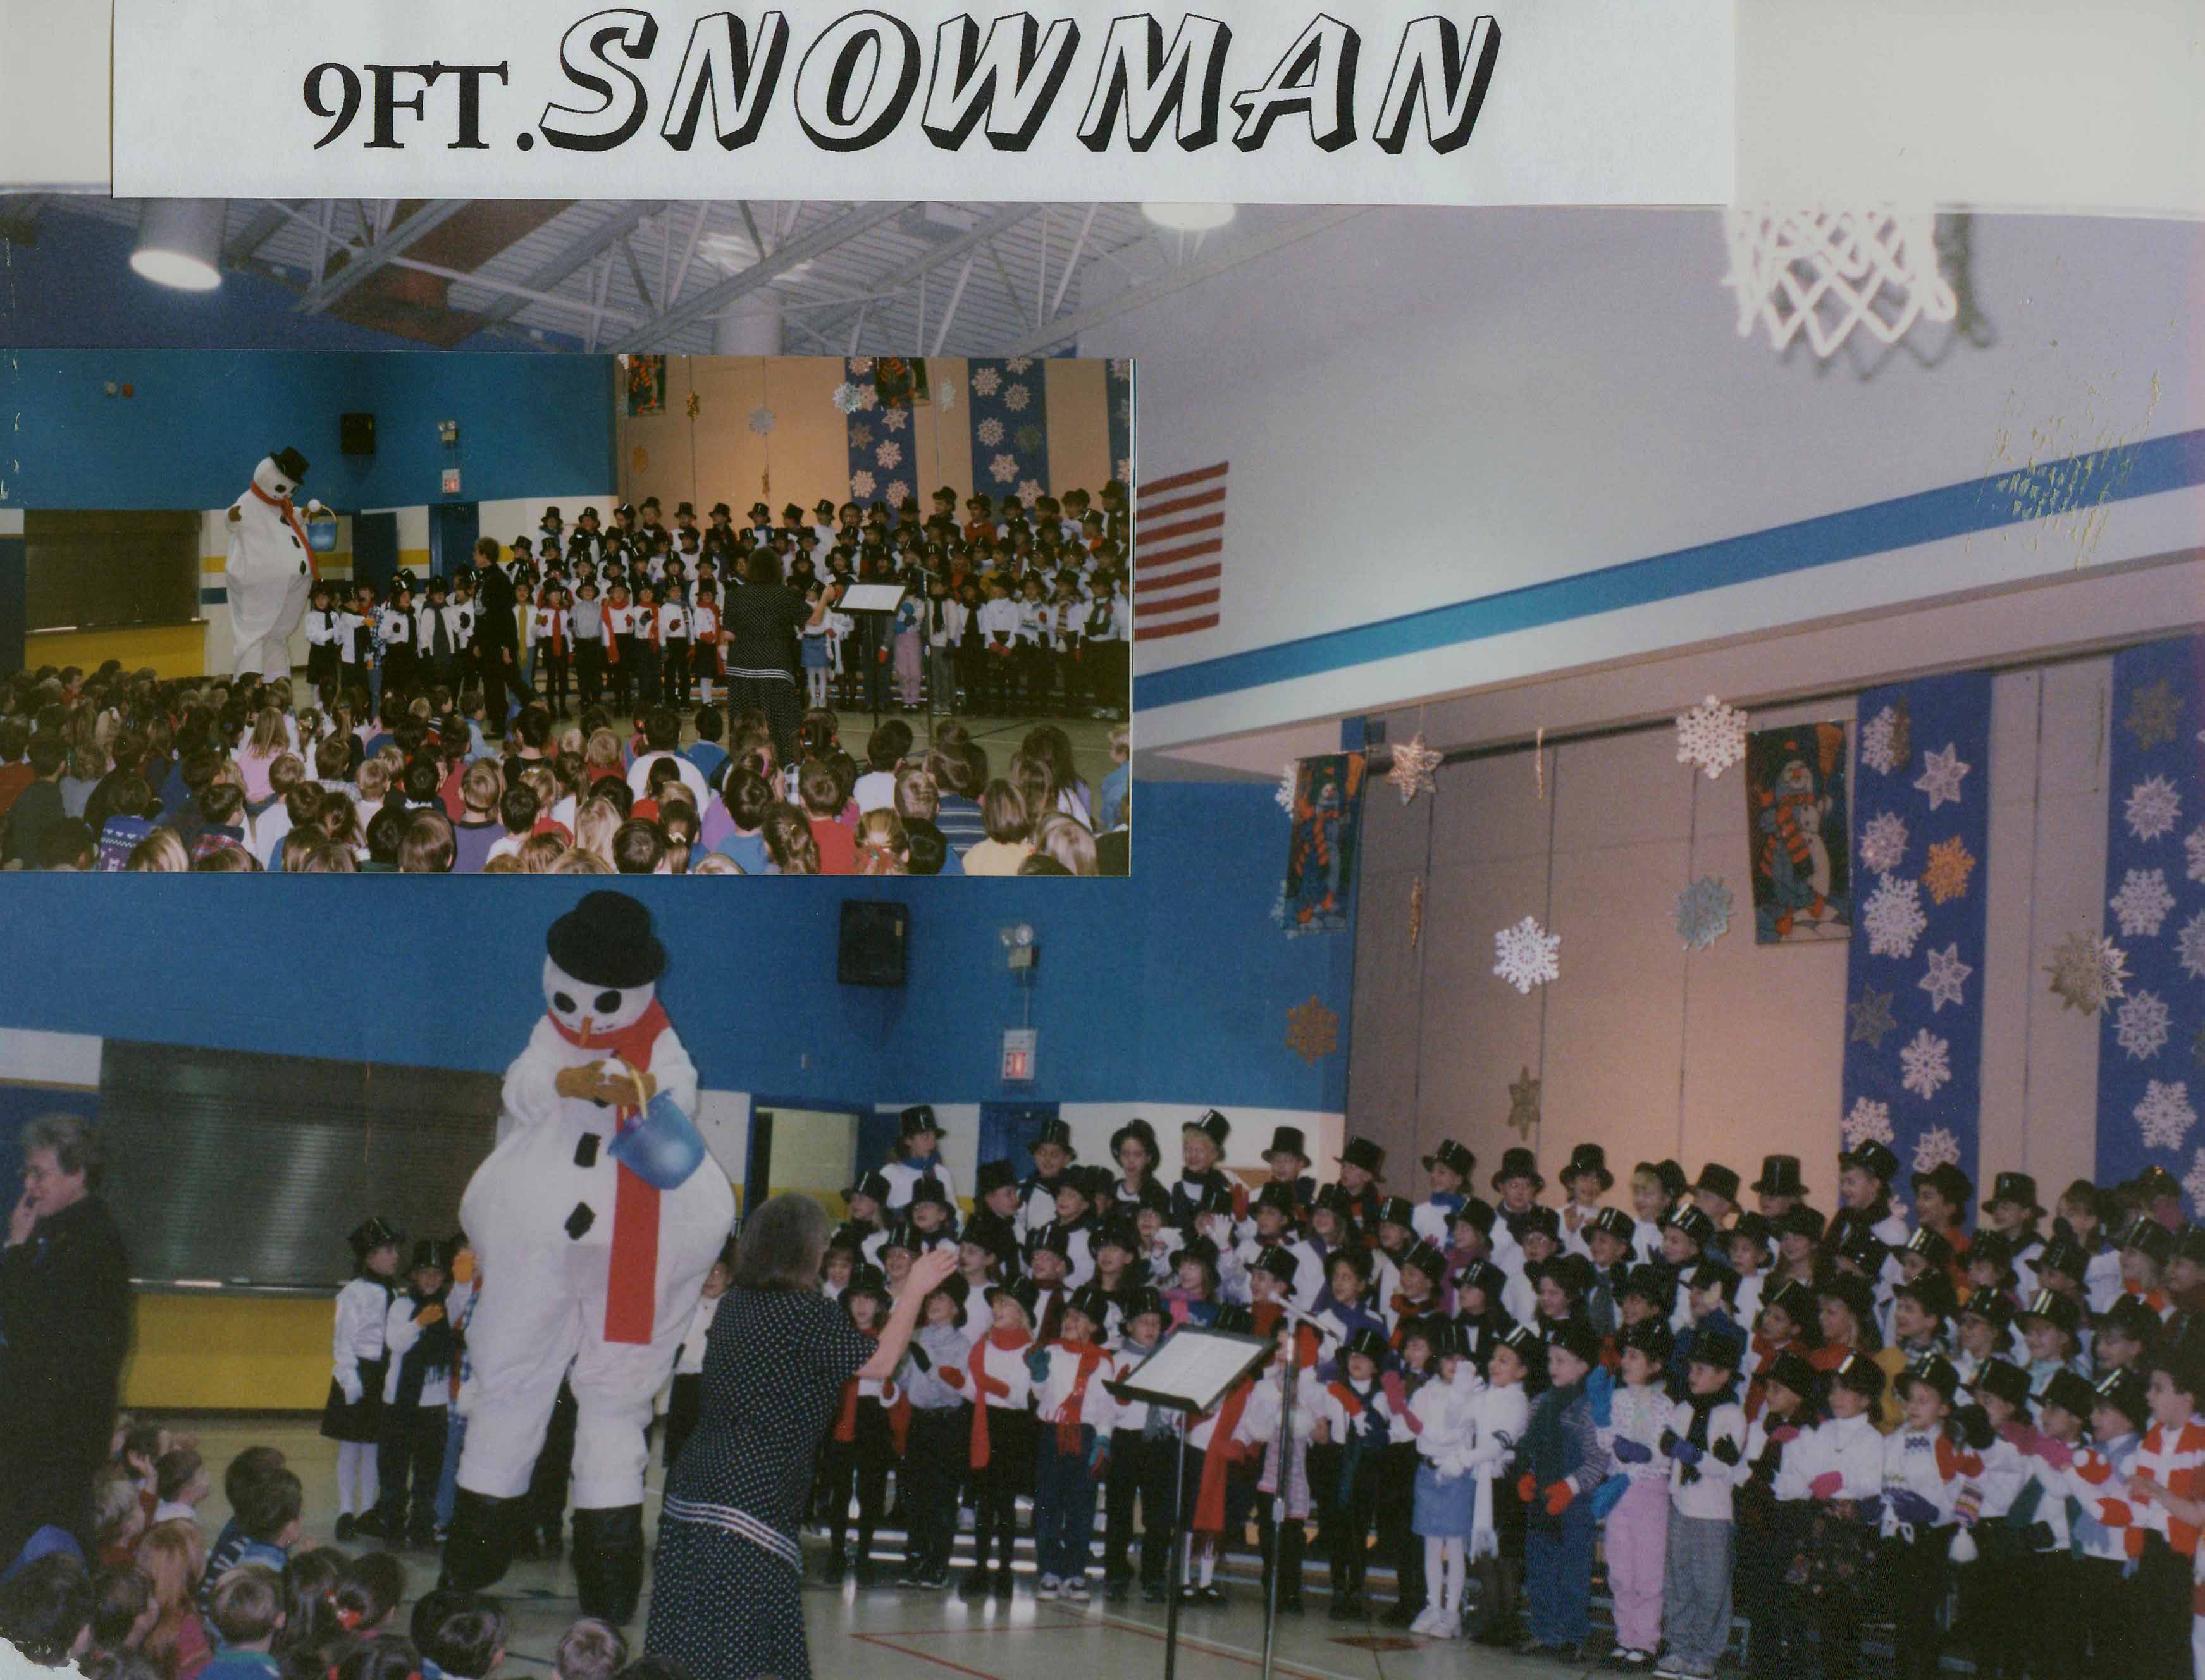 9FT.-SNOWMAN-scanner-35mm-pics-08.jpg